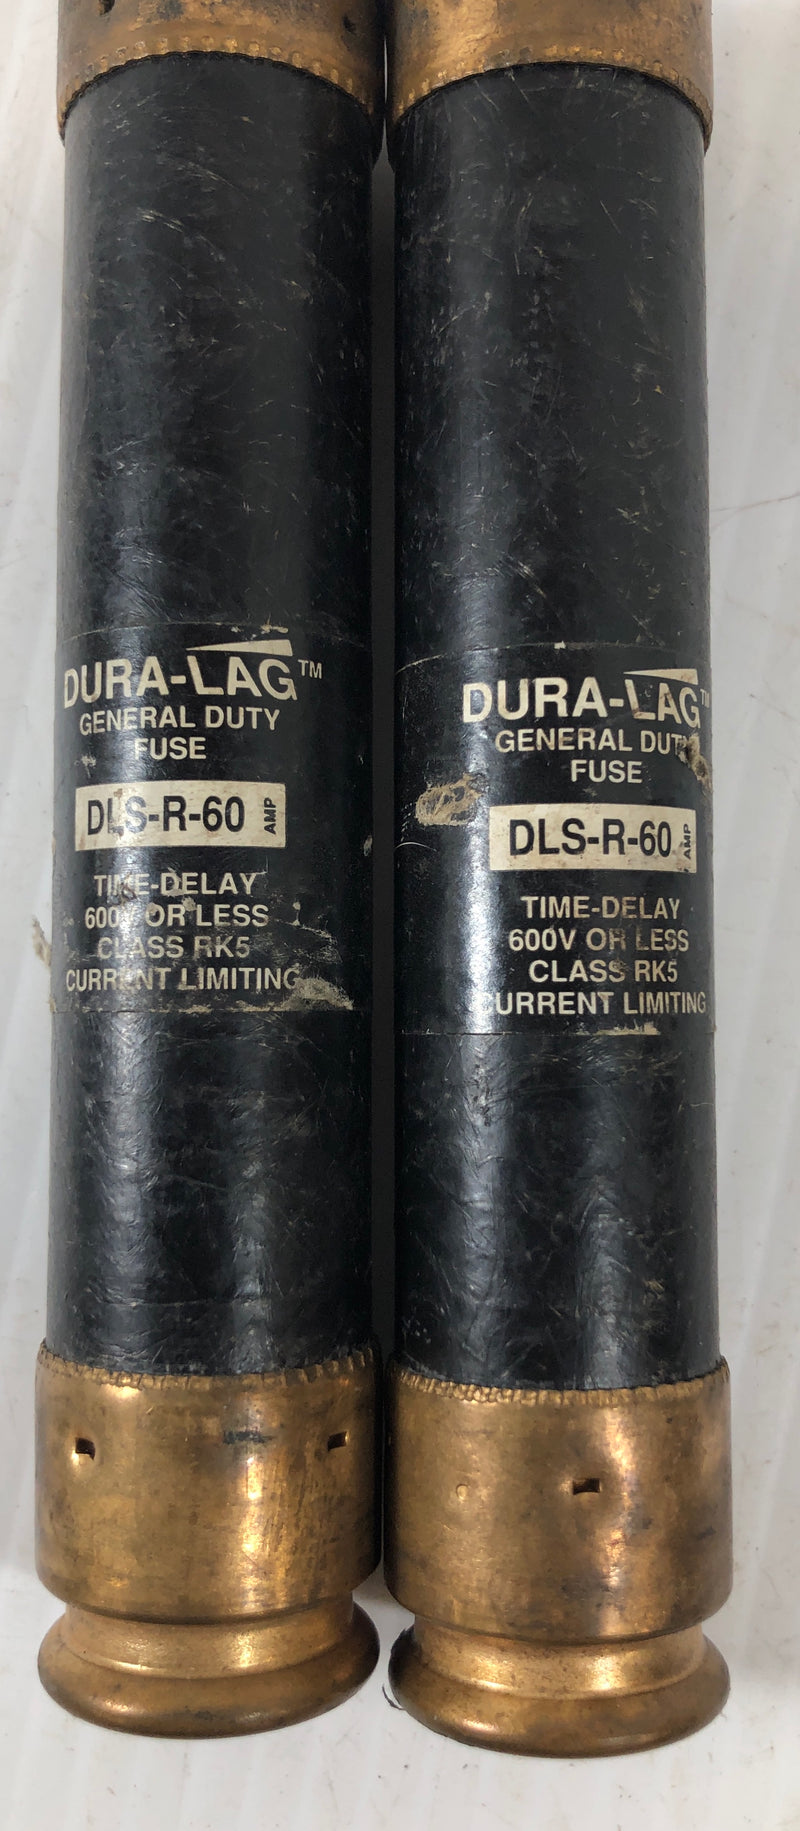 Dura-Lag General Duty Fuse DLS-R-60 (Lot of 2)